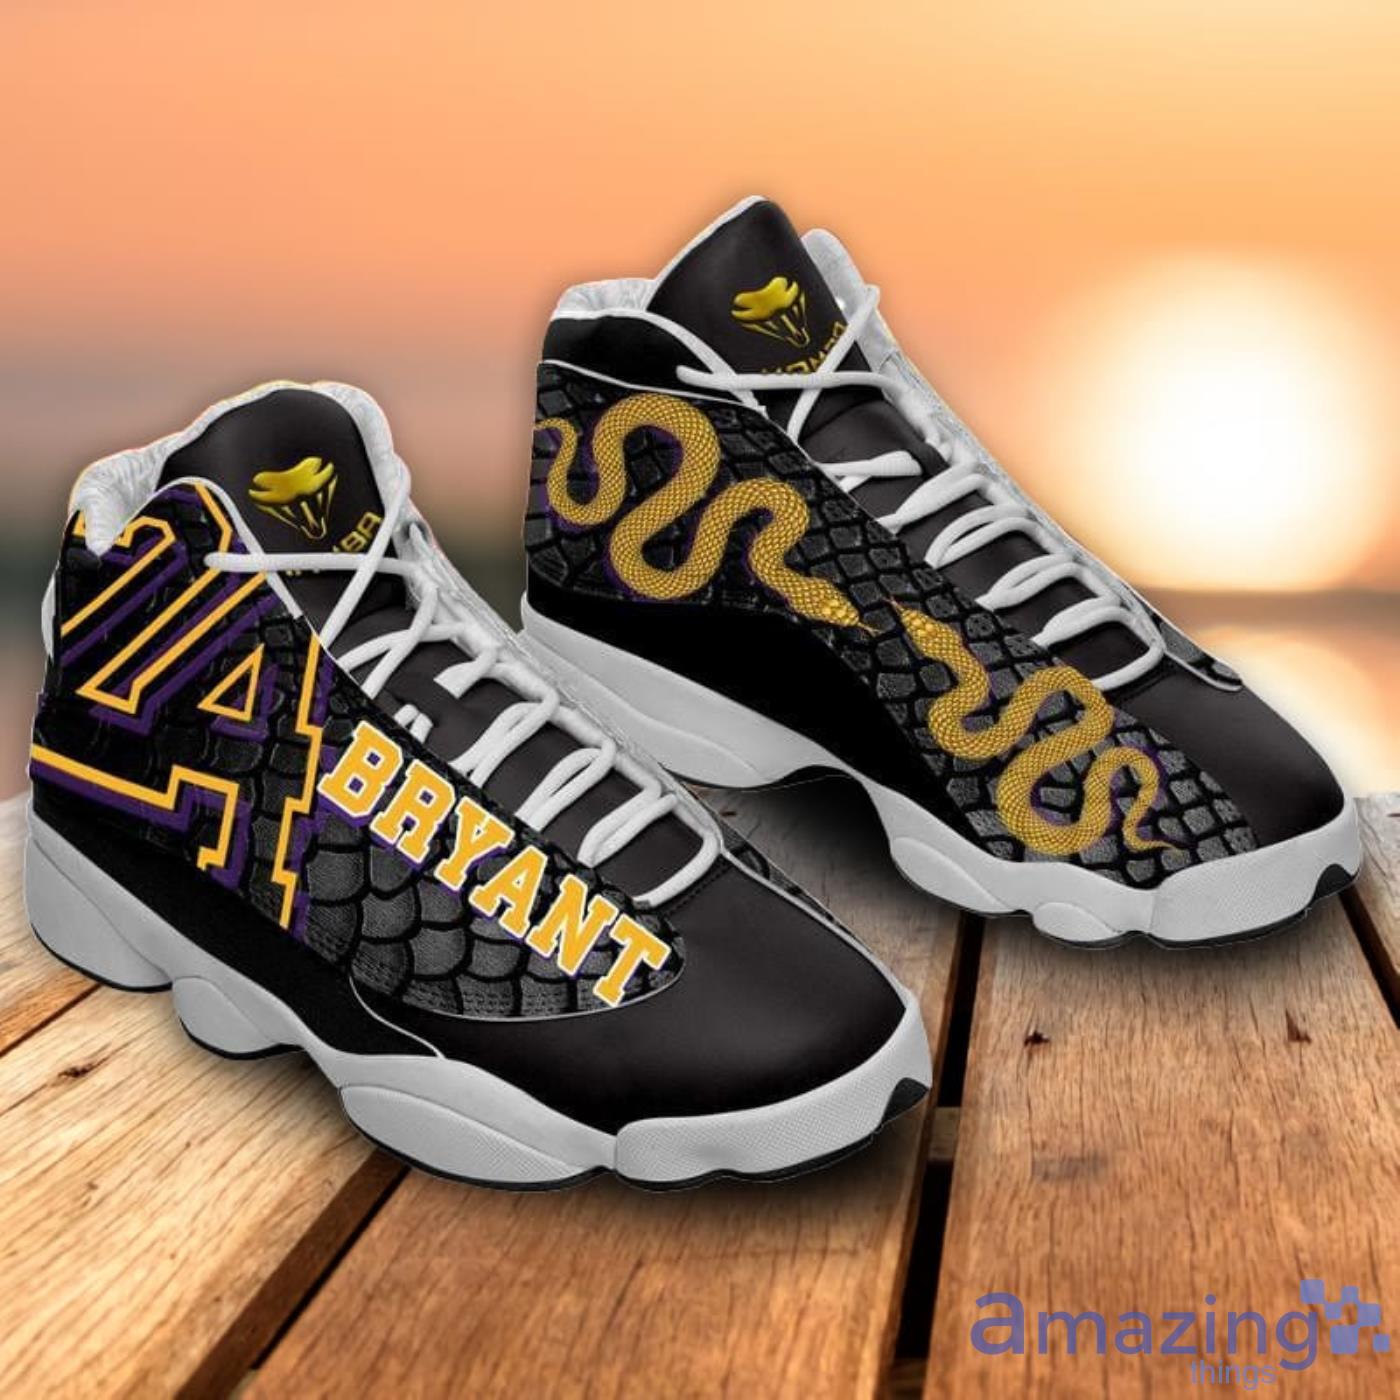 Kobe Bryant Limited Edition Air Jordan 13 Sneakers Shoes